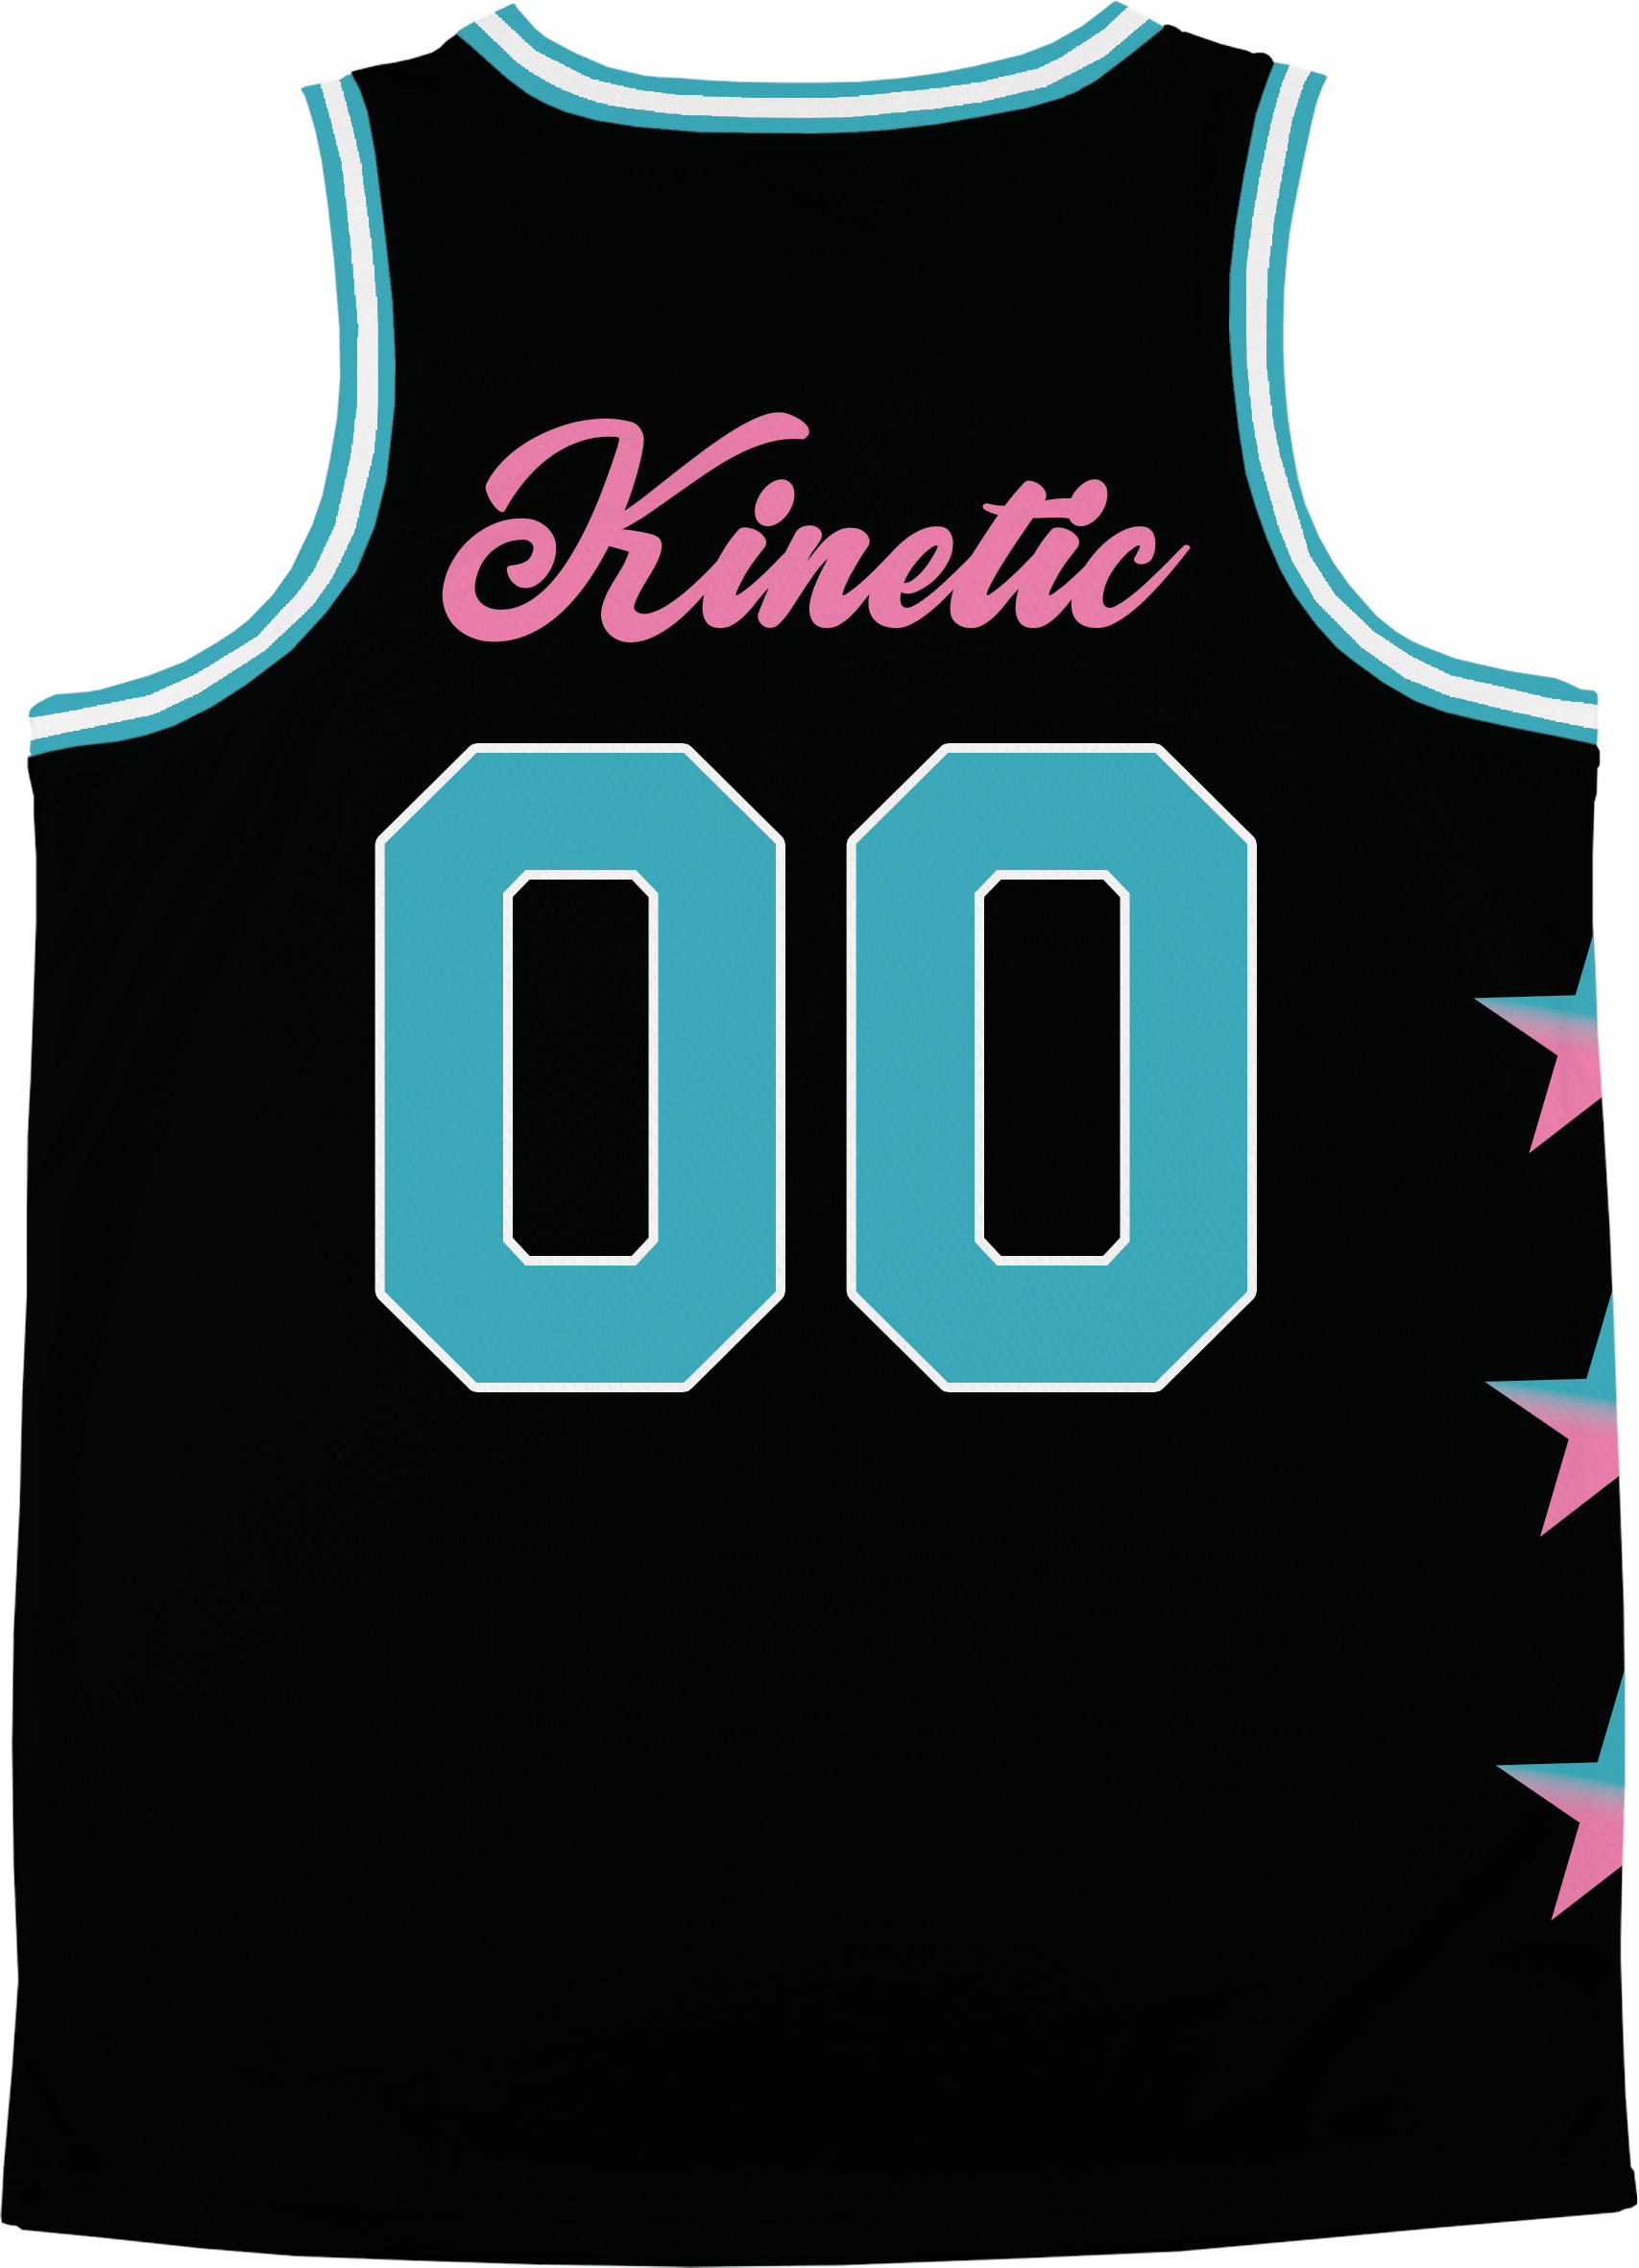 Kappa Alpha Order - Cotton Candy Basketball Jersey Premium Basketball Kinetic Society LLC 